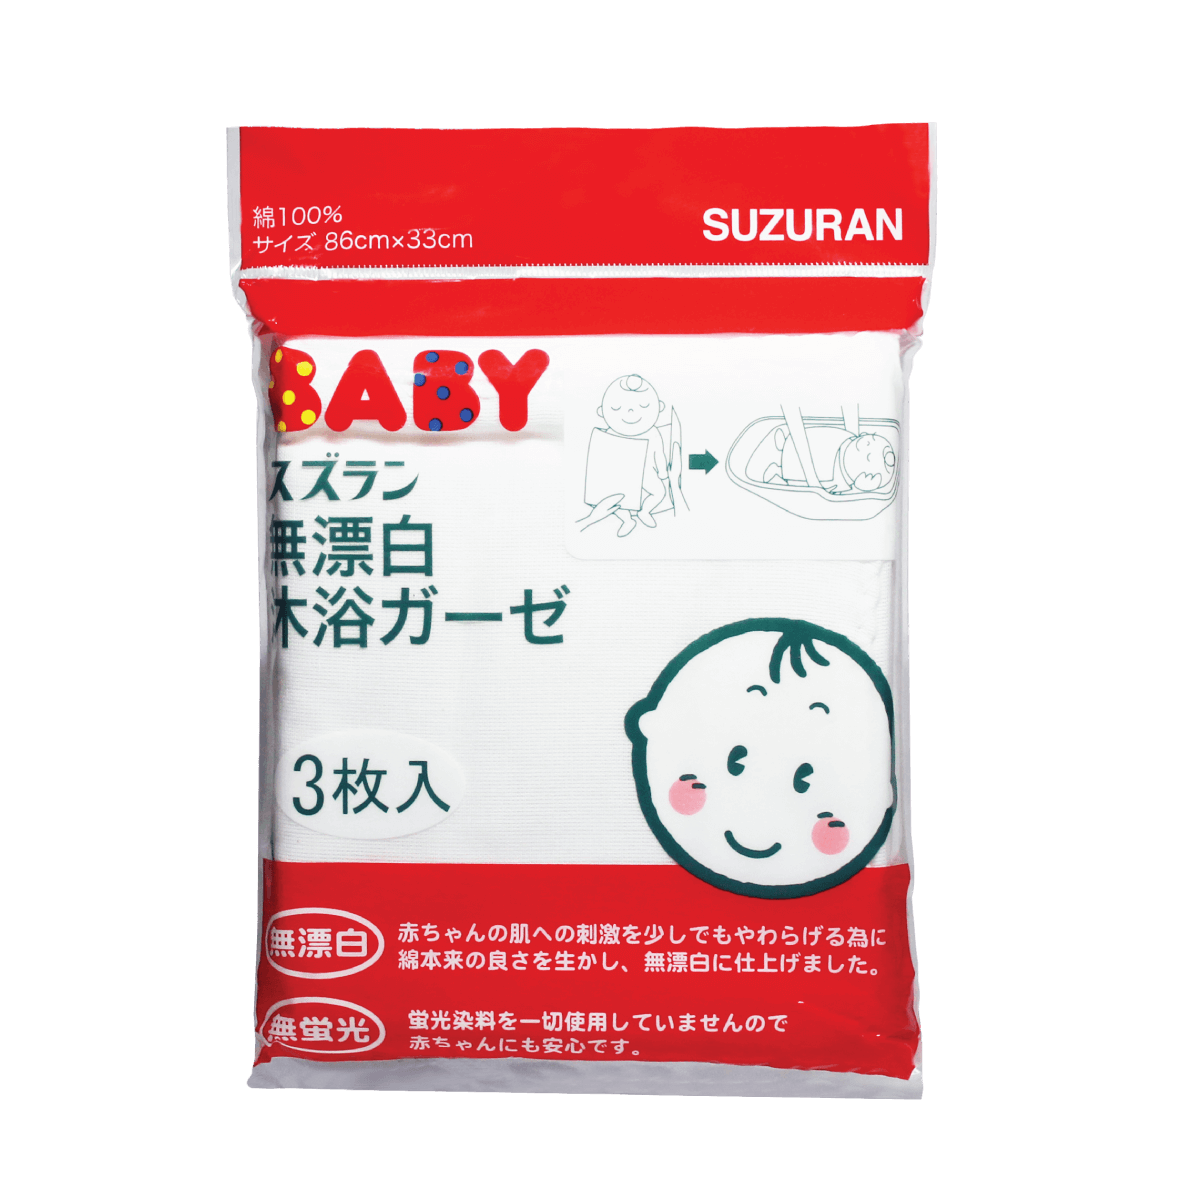 Suzuran Baby Swaddle Bath Towel